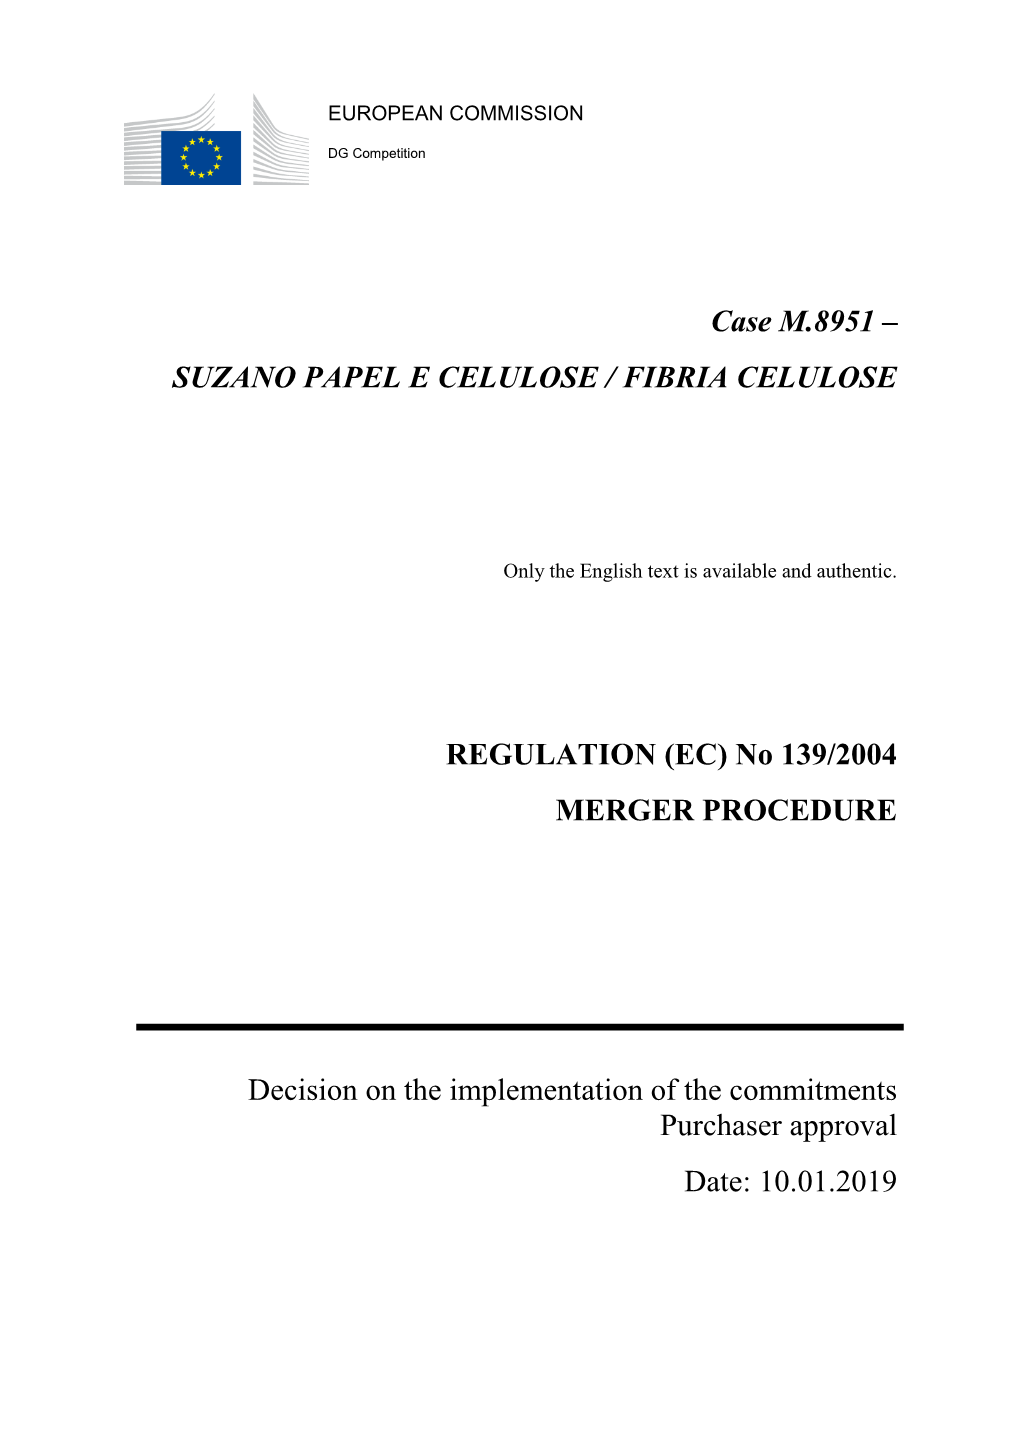 (EC) No 139/2004 MERGER PROCEDURE Decision on the Implemen